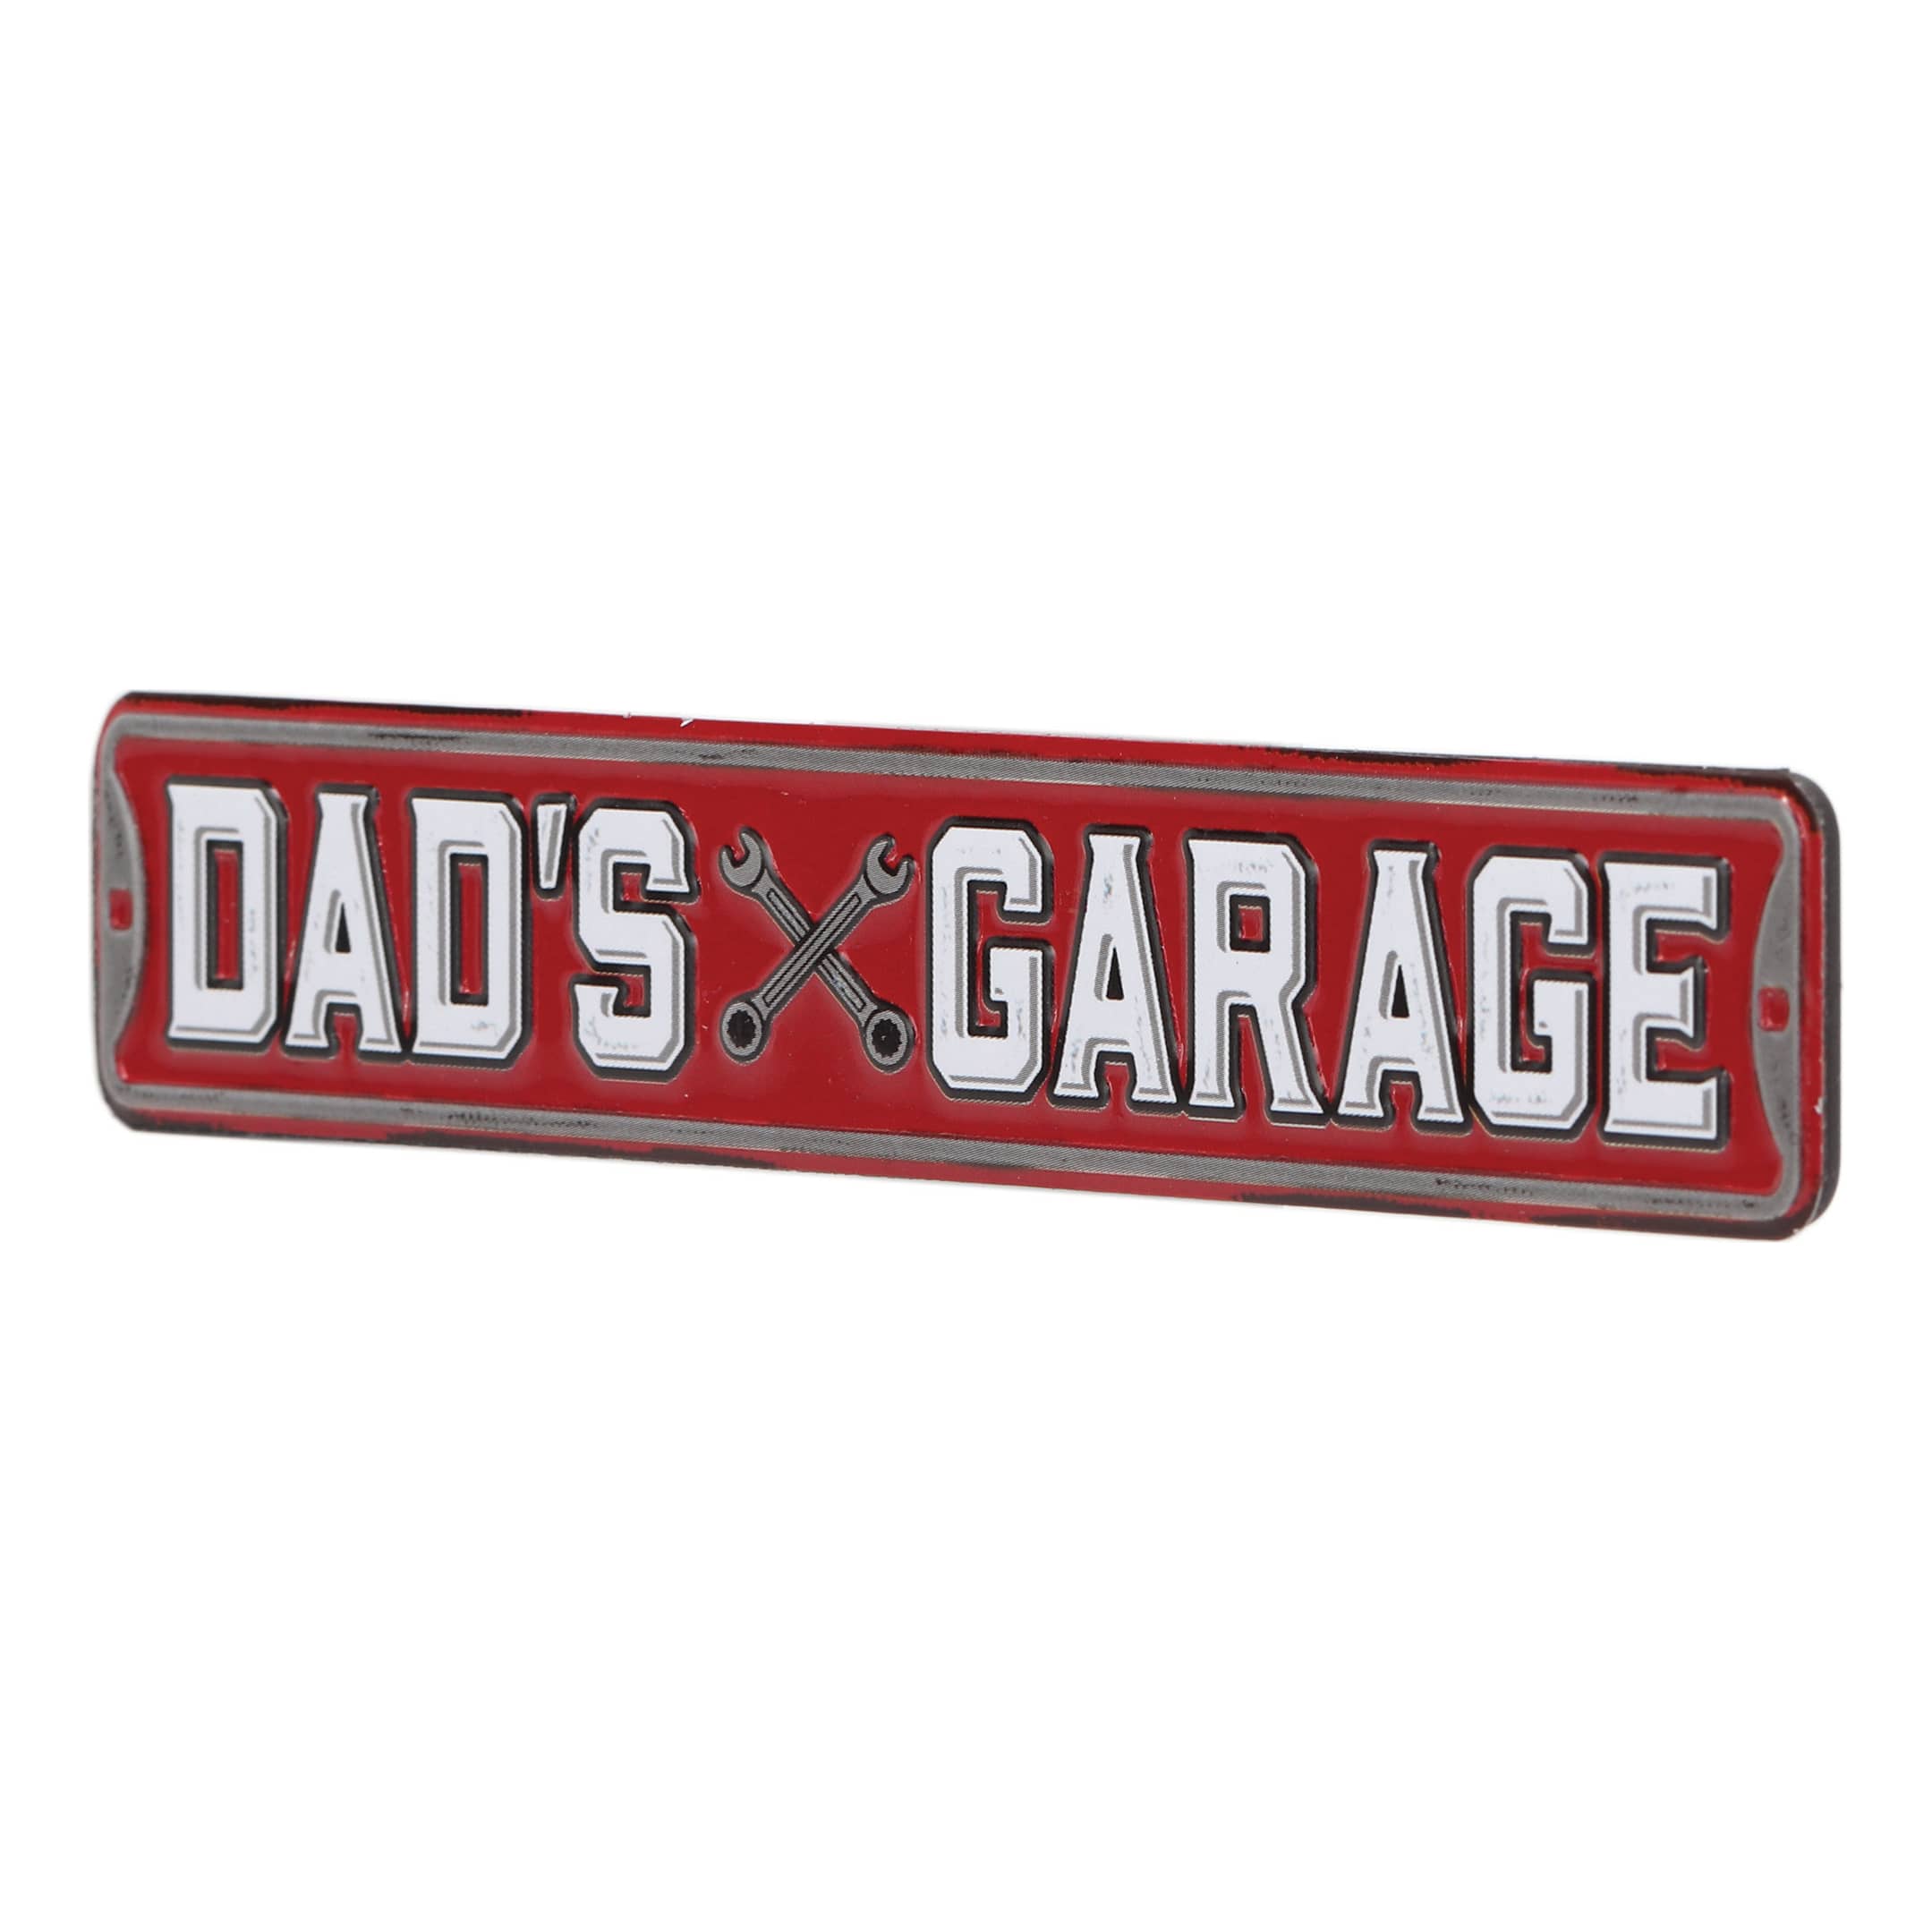 Open Roads Dad's Garage Street Sign Magnet